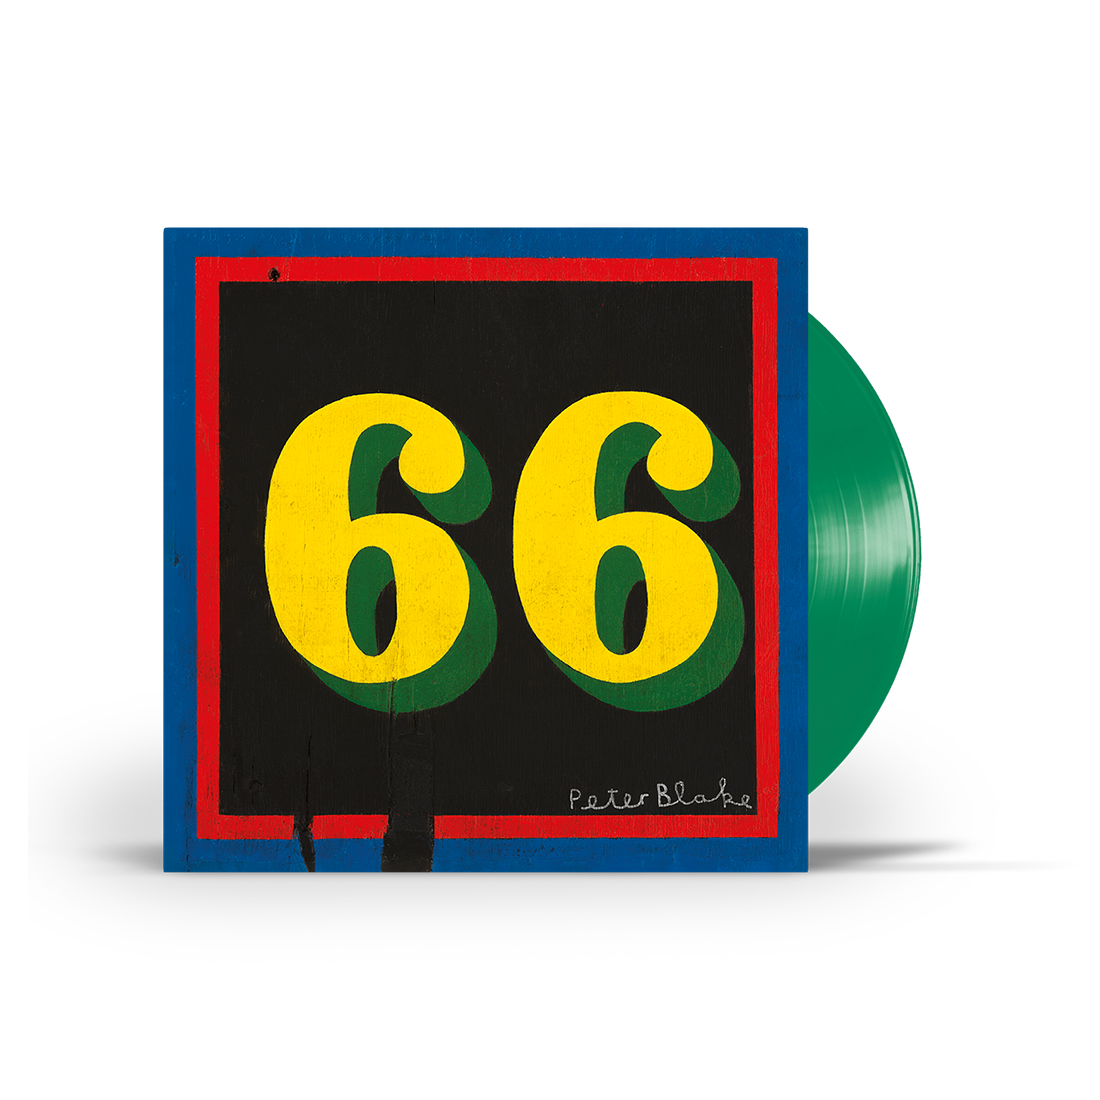 Paul Weller - 66 Green Vinyl